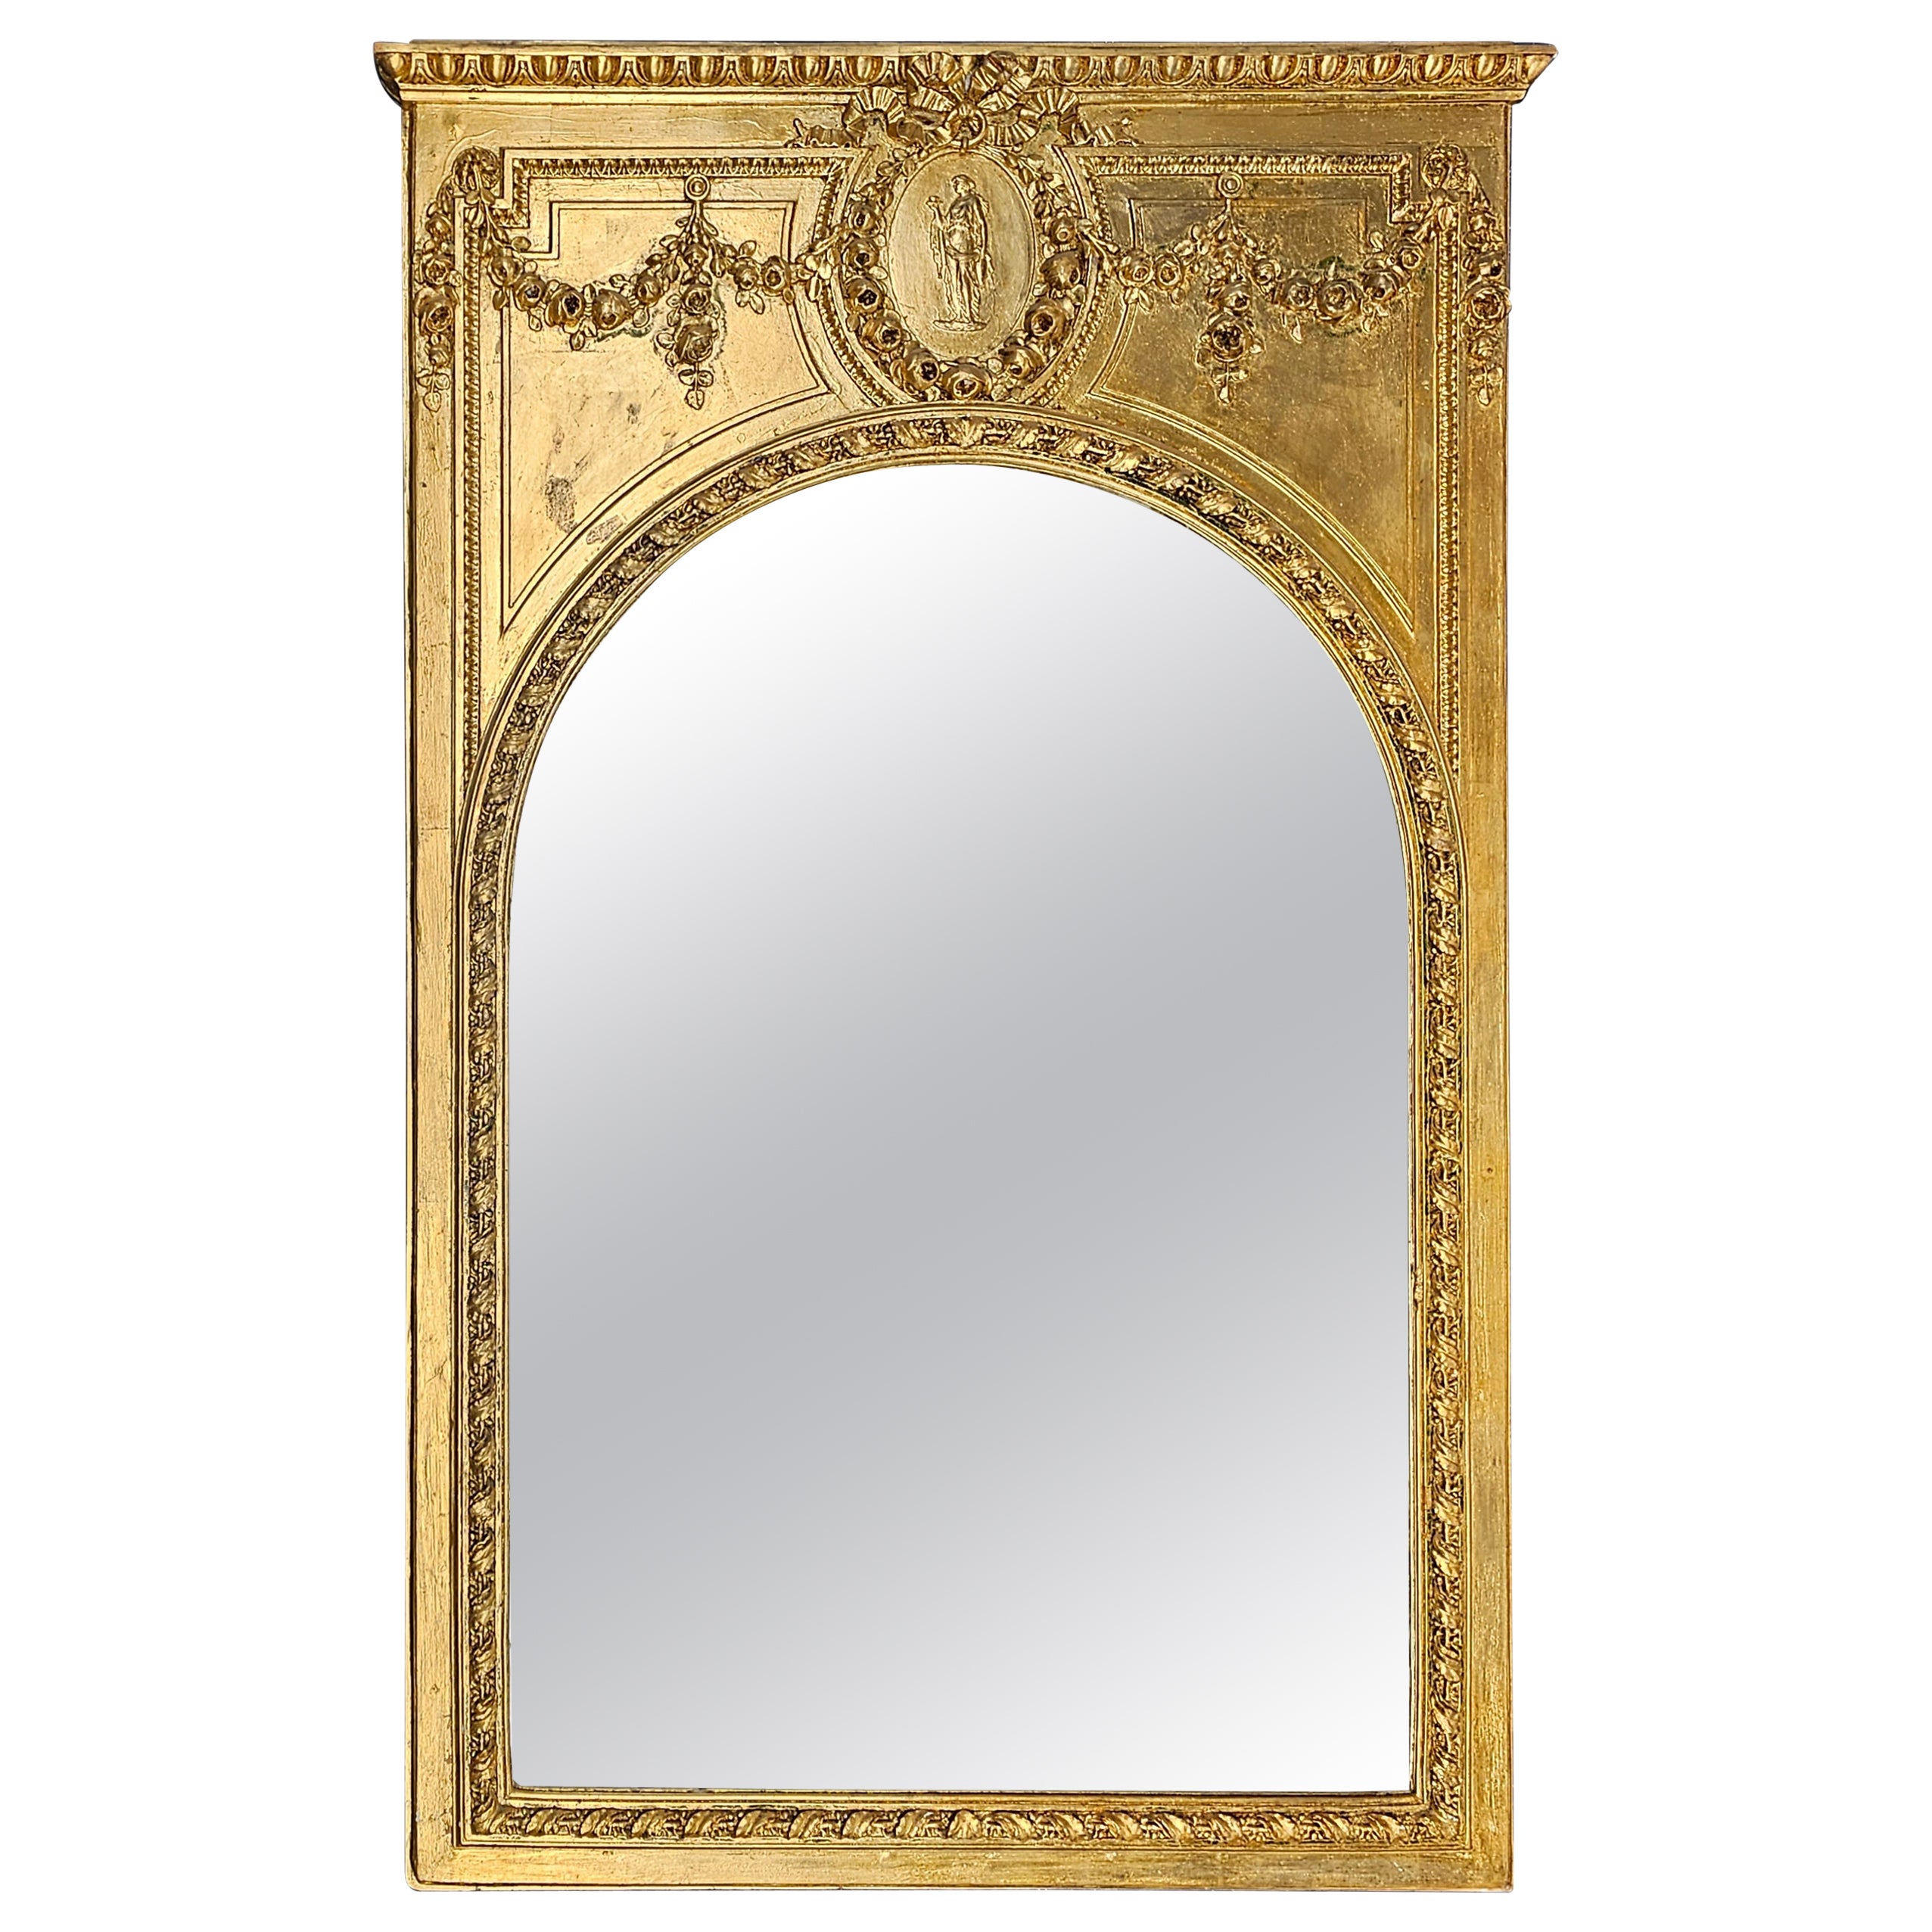 Impressive 20th Century Bespoke Giltwood Louis XVI Style French Trumeau Mirror For Sale